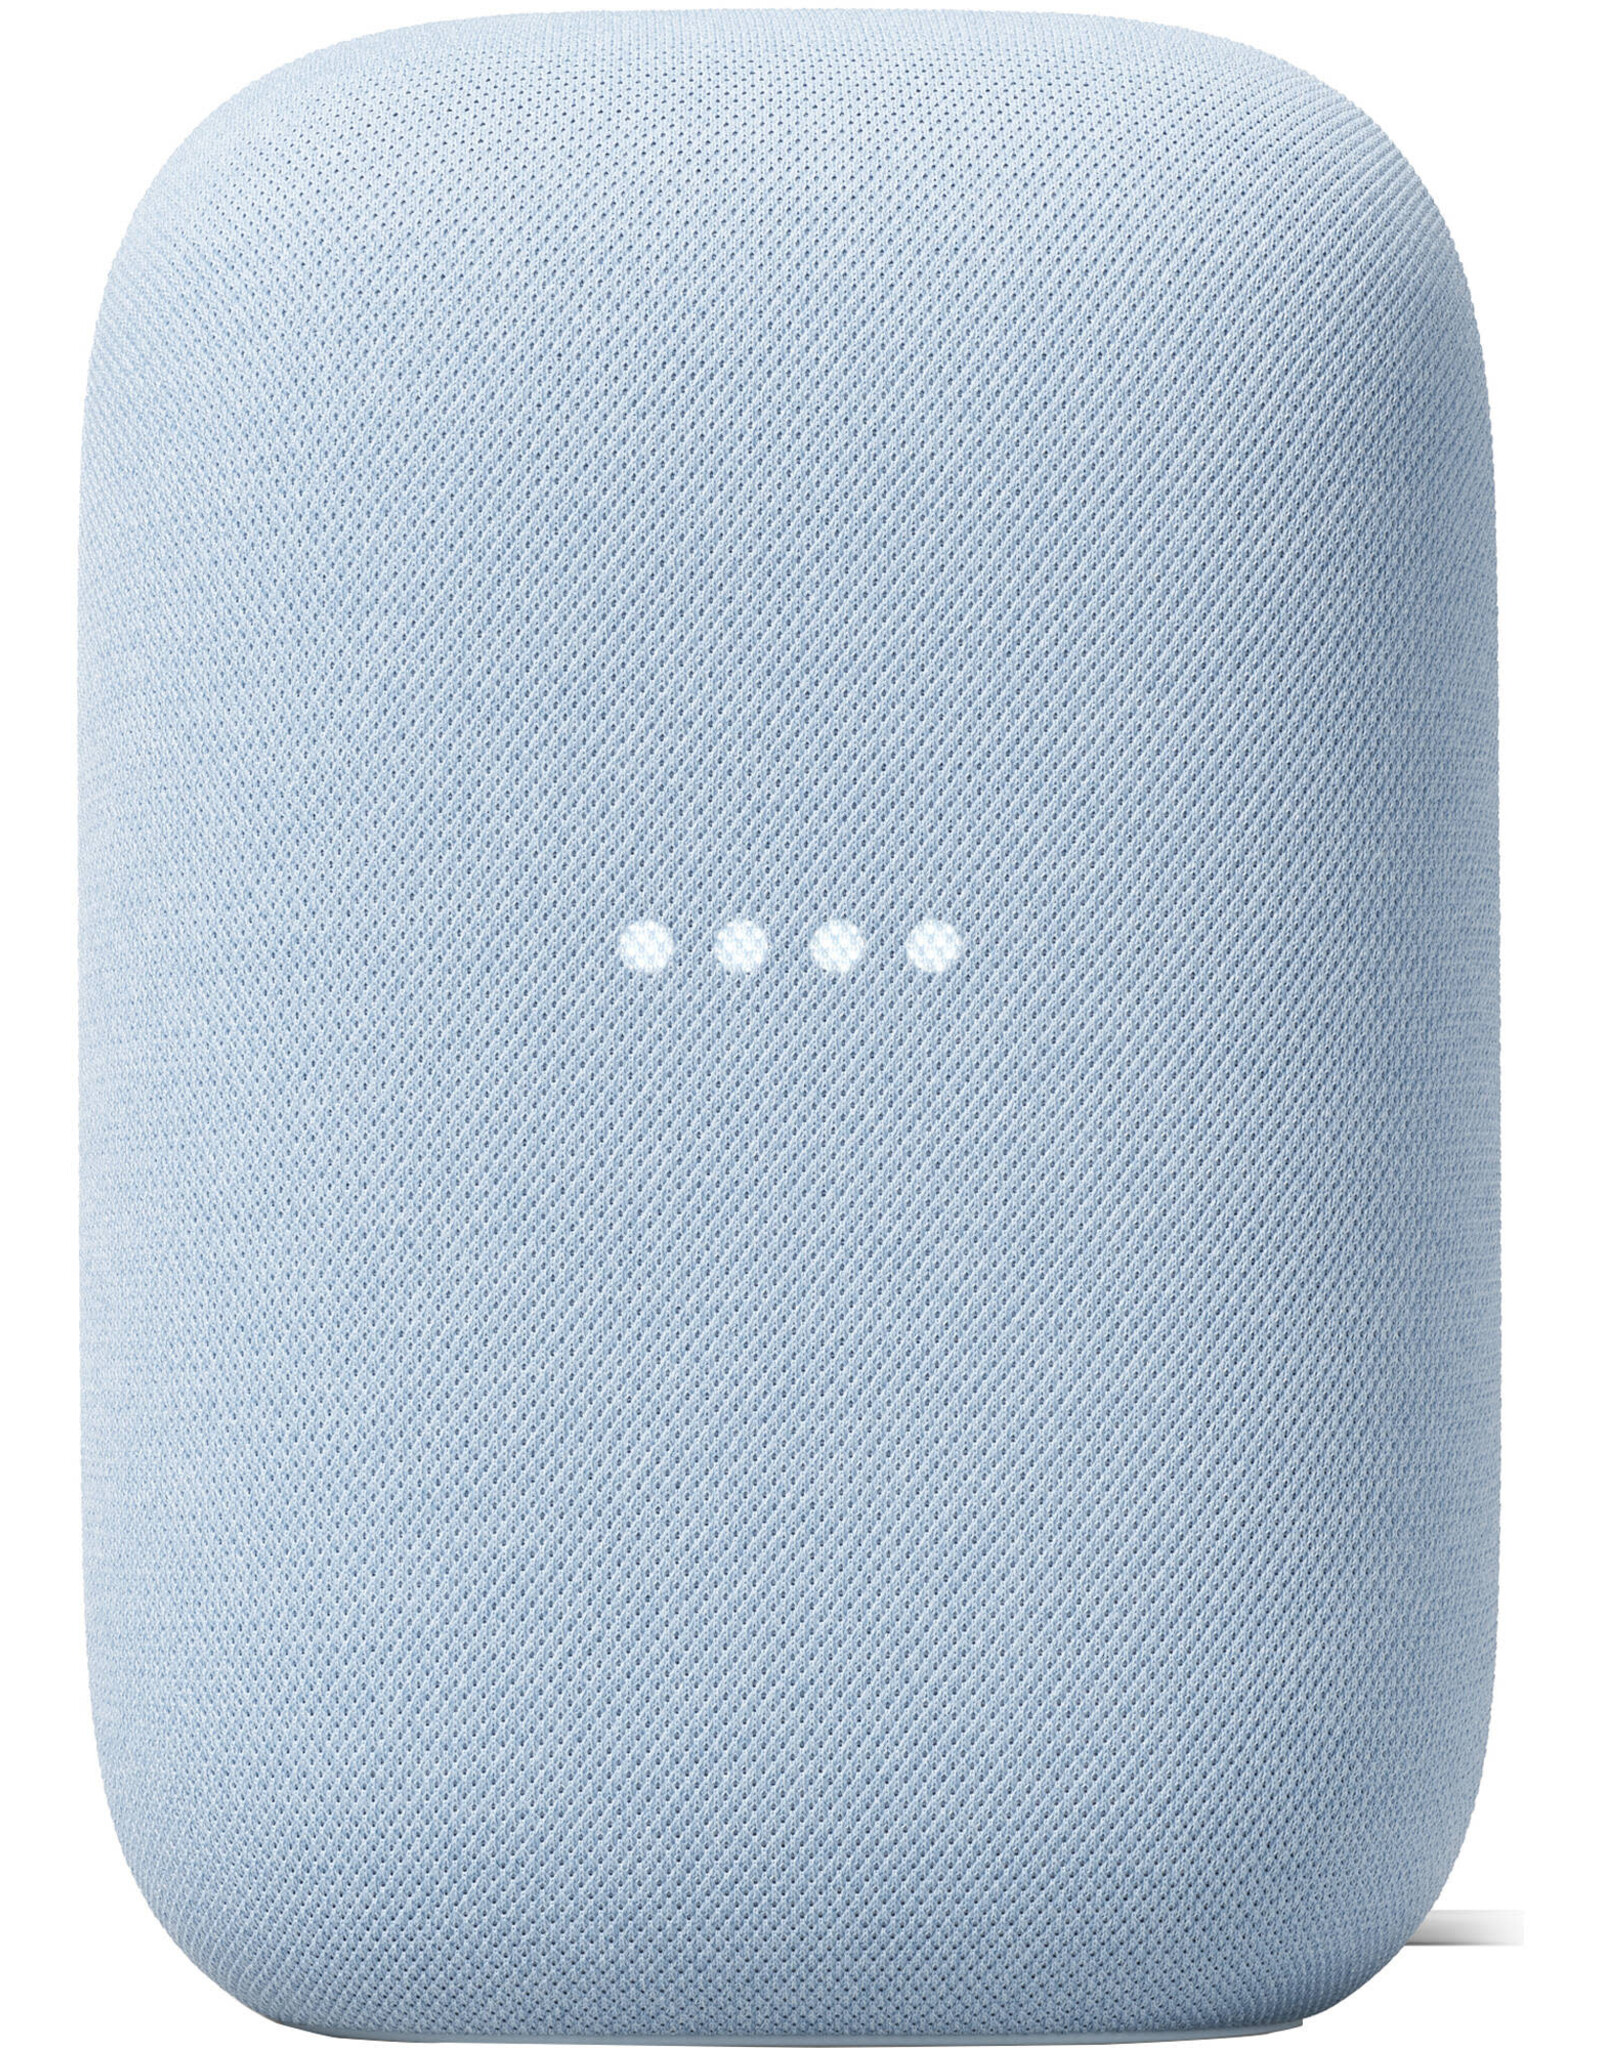 Google Google- Nest Audio- Smart Speaker- Sky